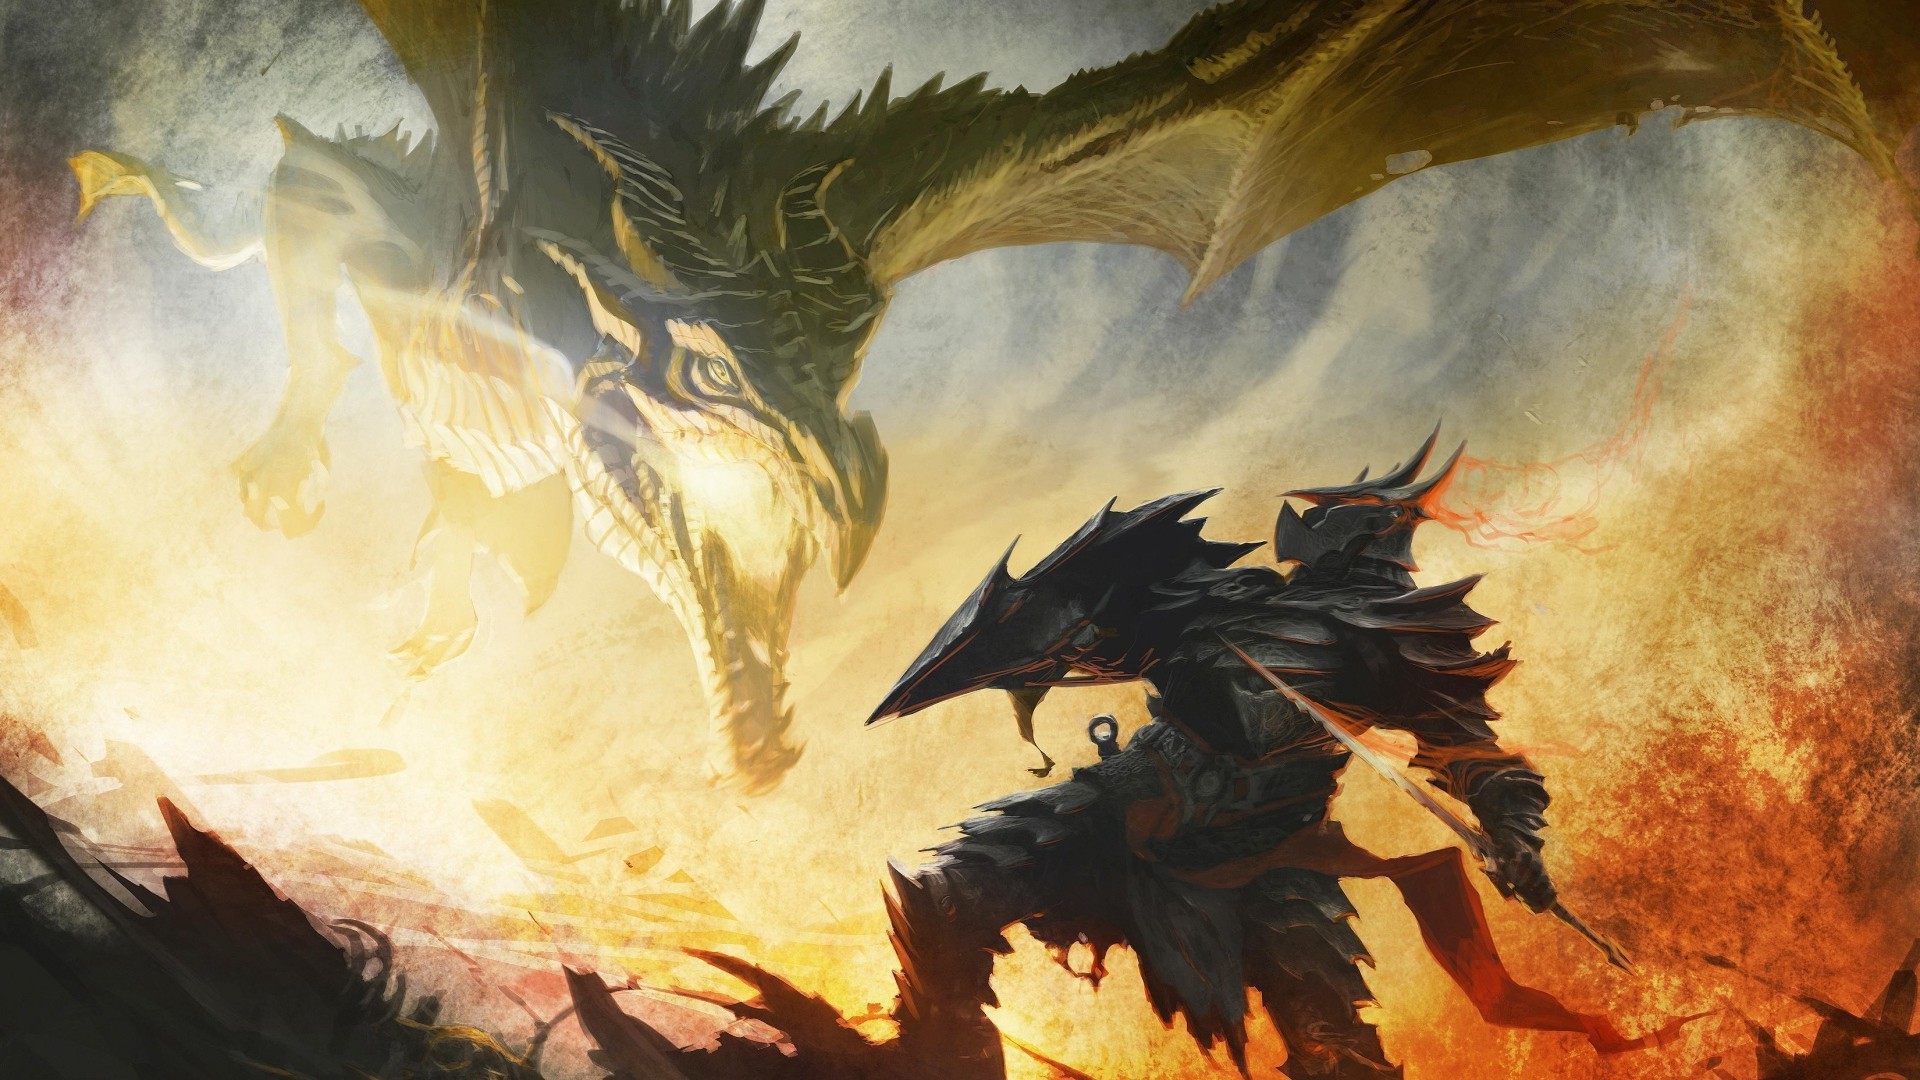 The Elder Scrolls V: Skyrim, Alduin, Dragonborn Wallpaper